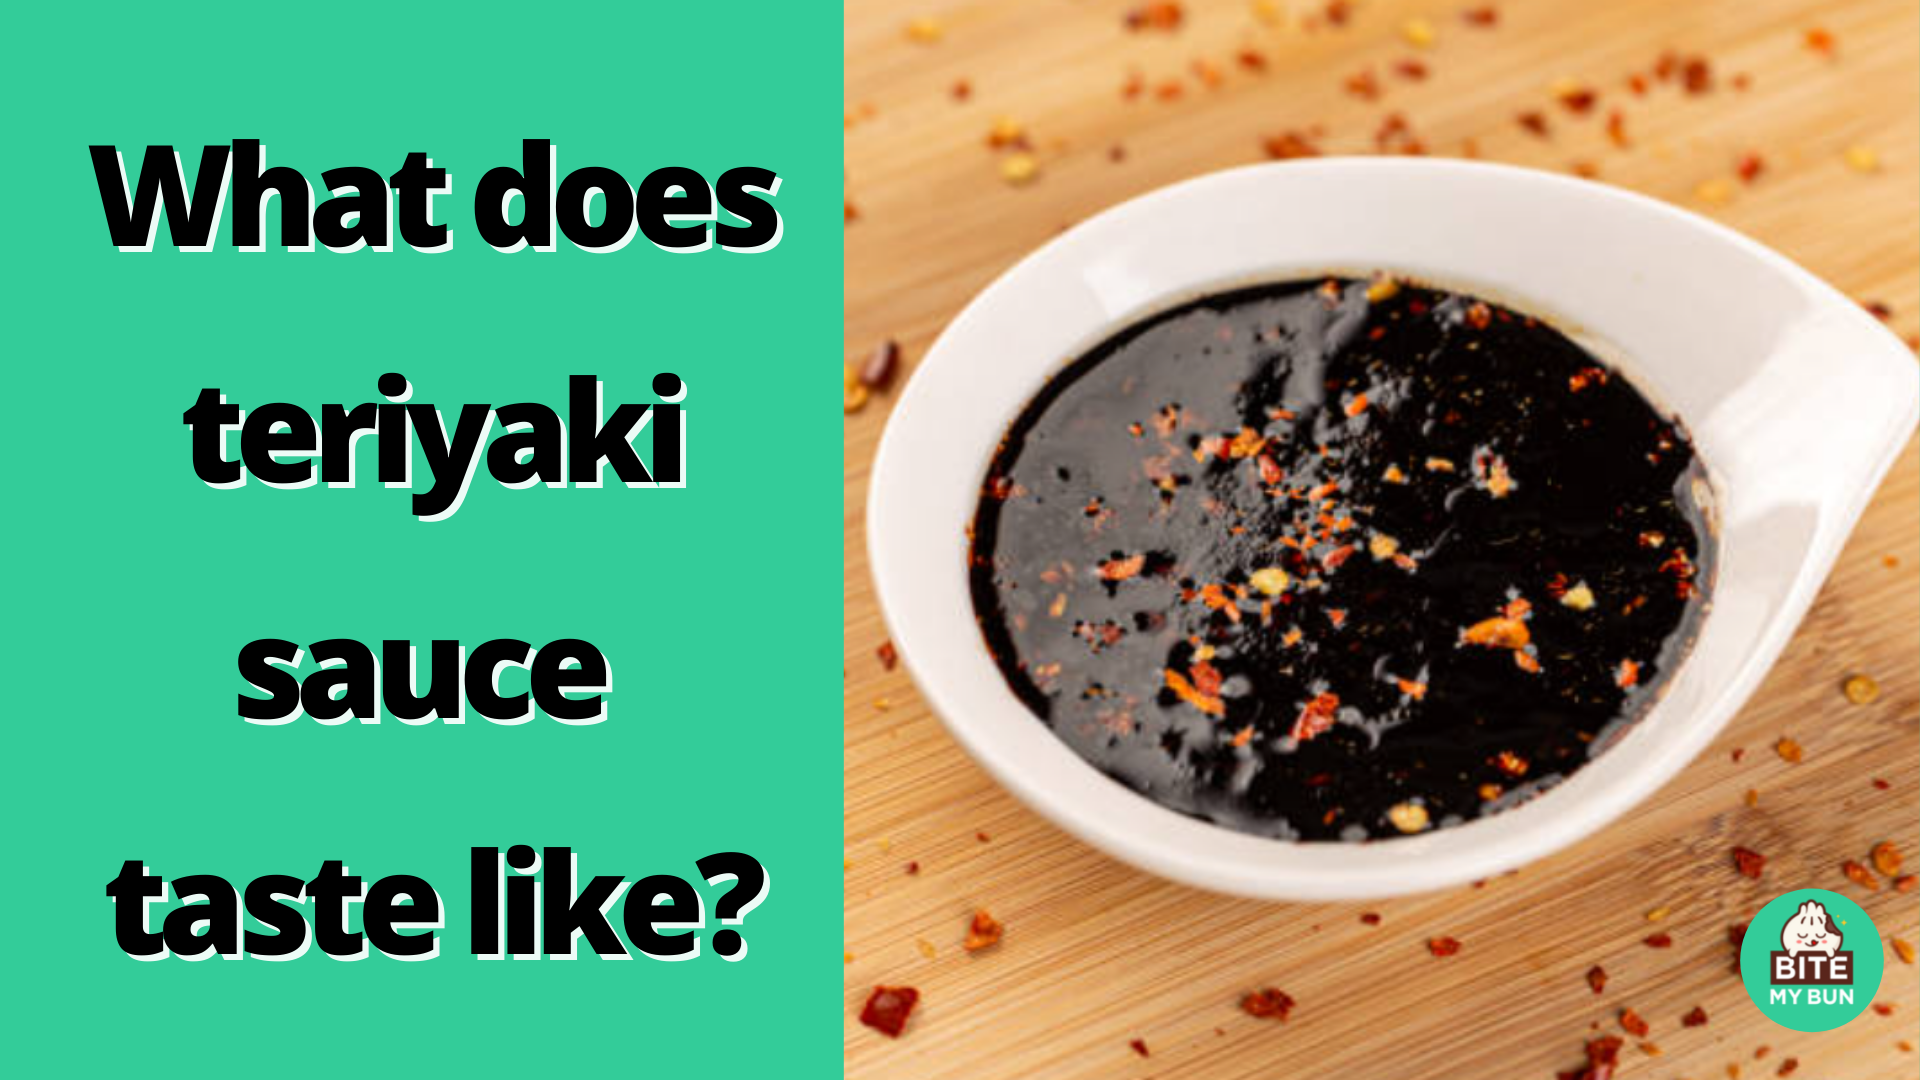 What does teriyaki sauce taste like? Let me describe the flavor